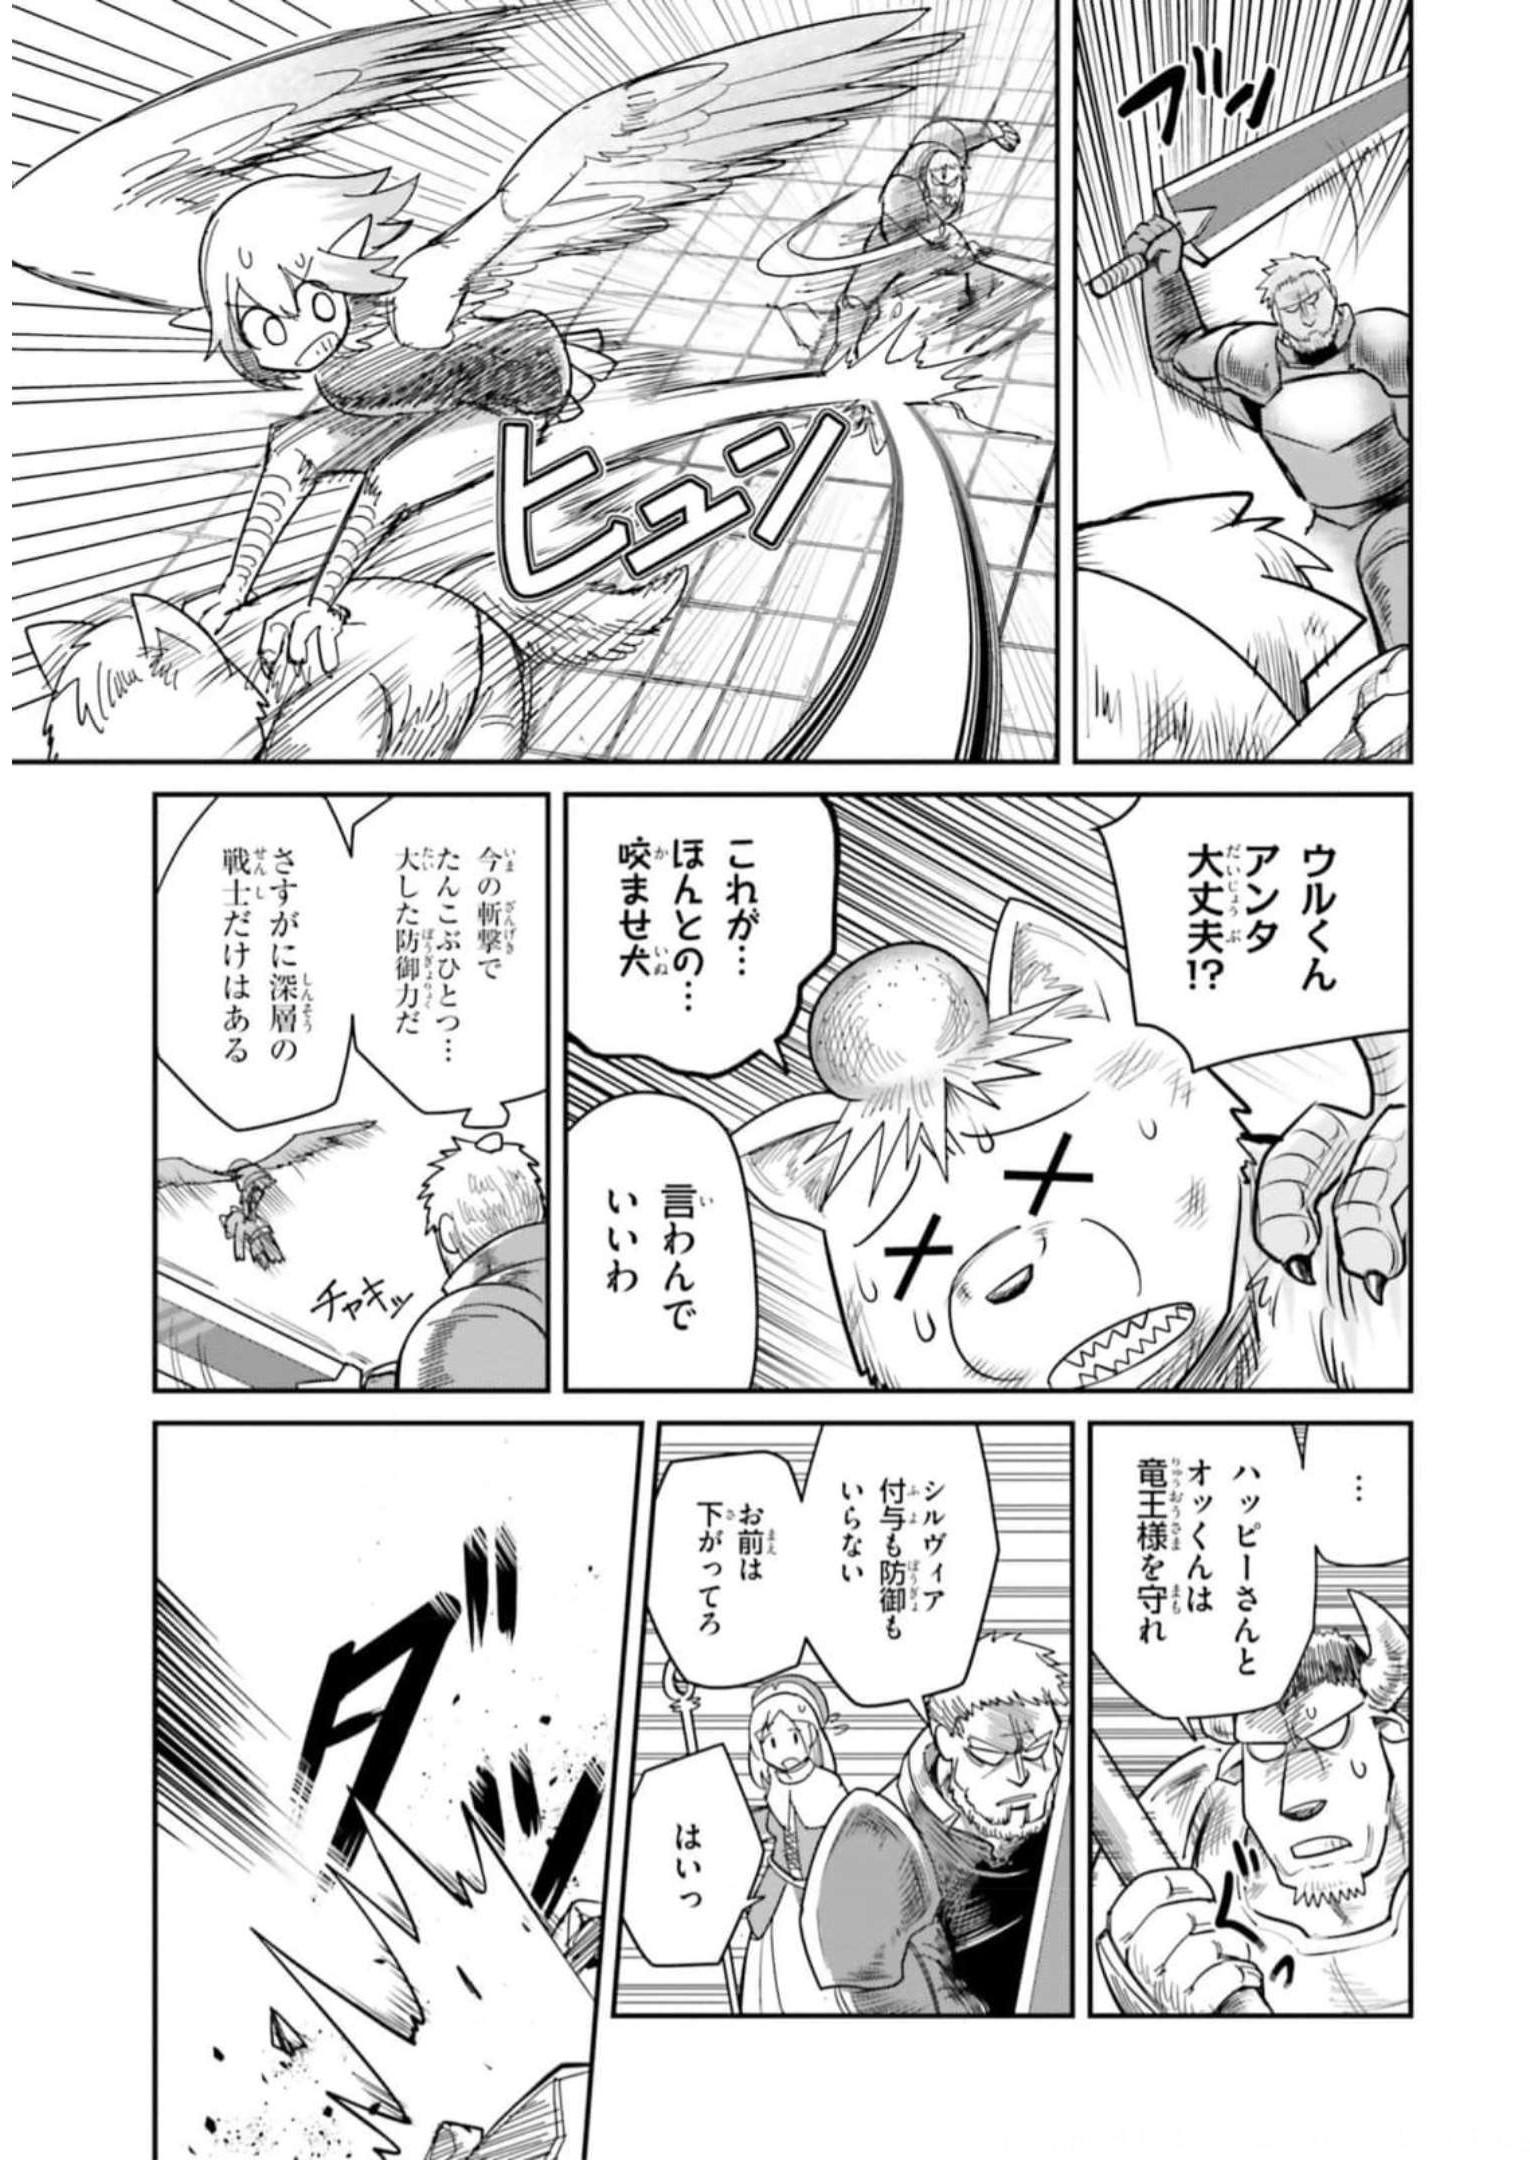 Dungeon no Osananajimi - Chapter 8 - Page 9